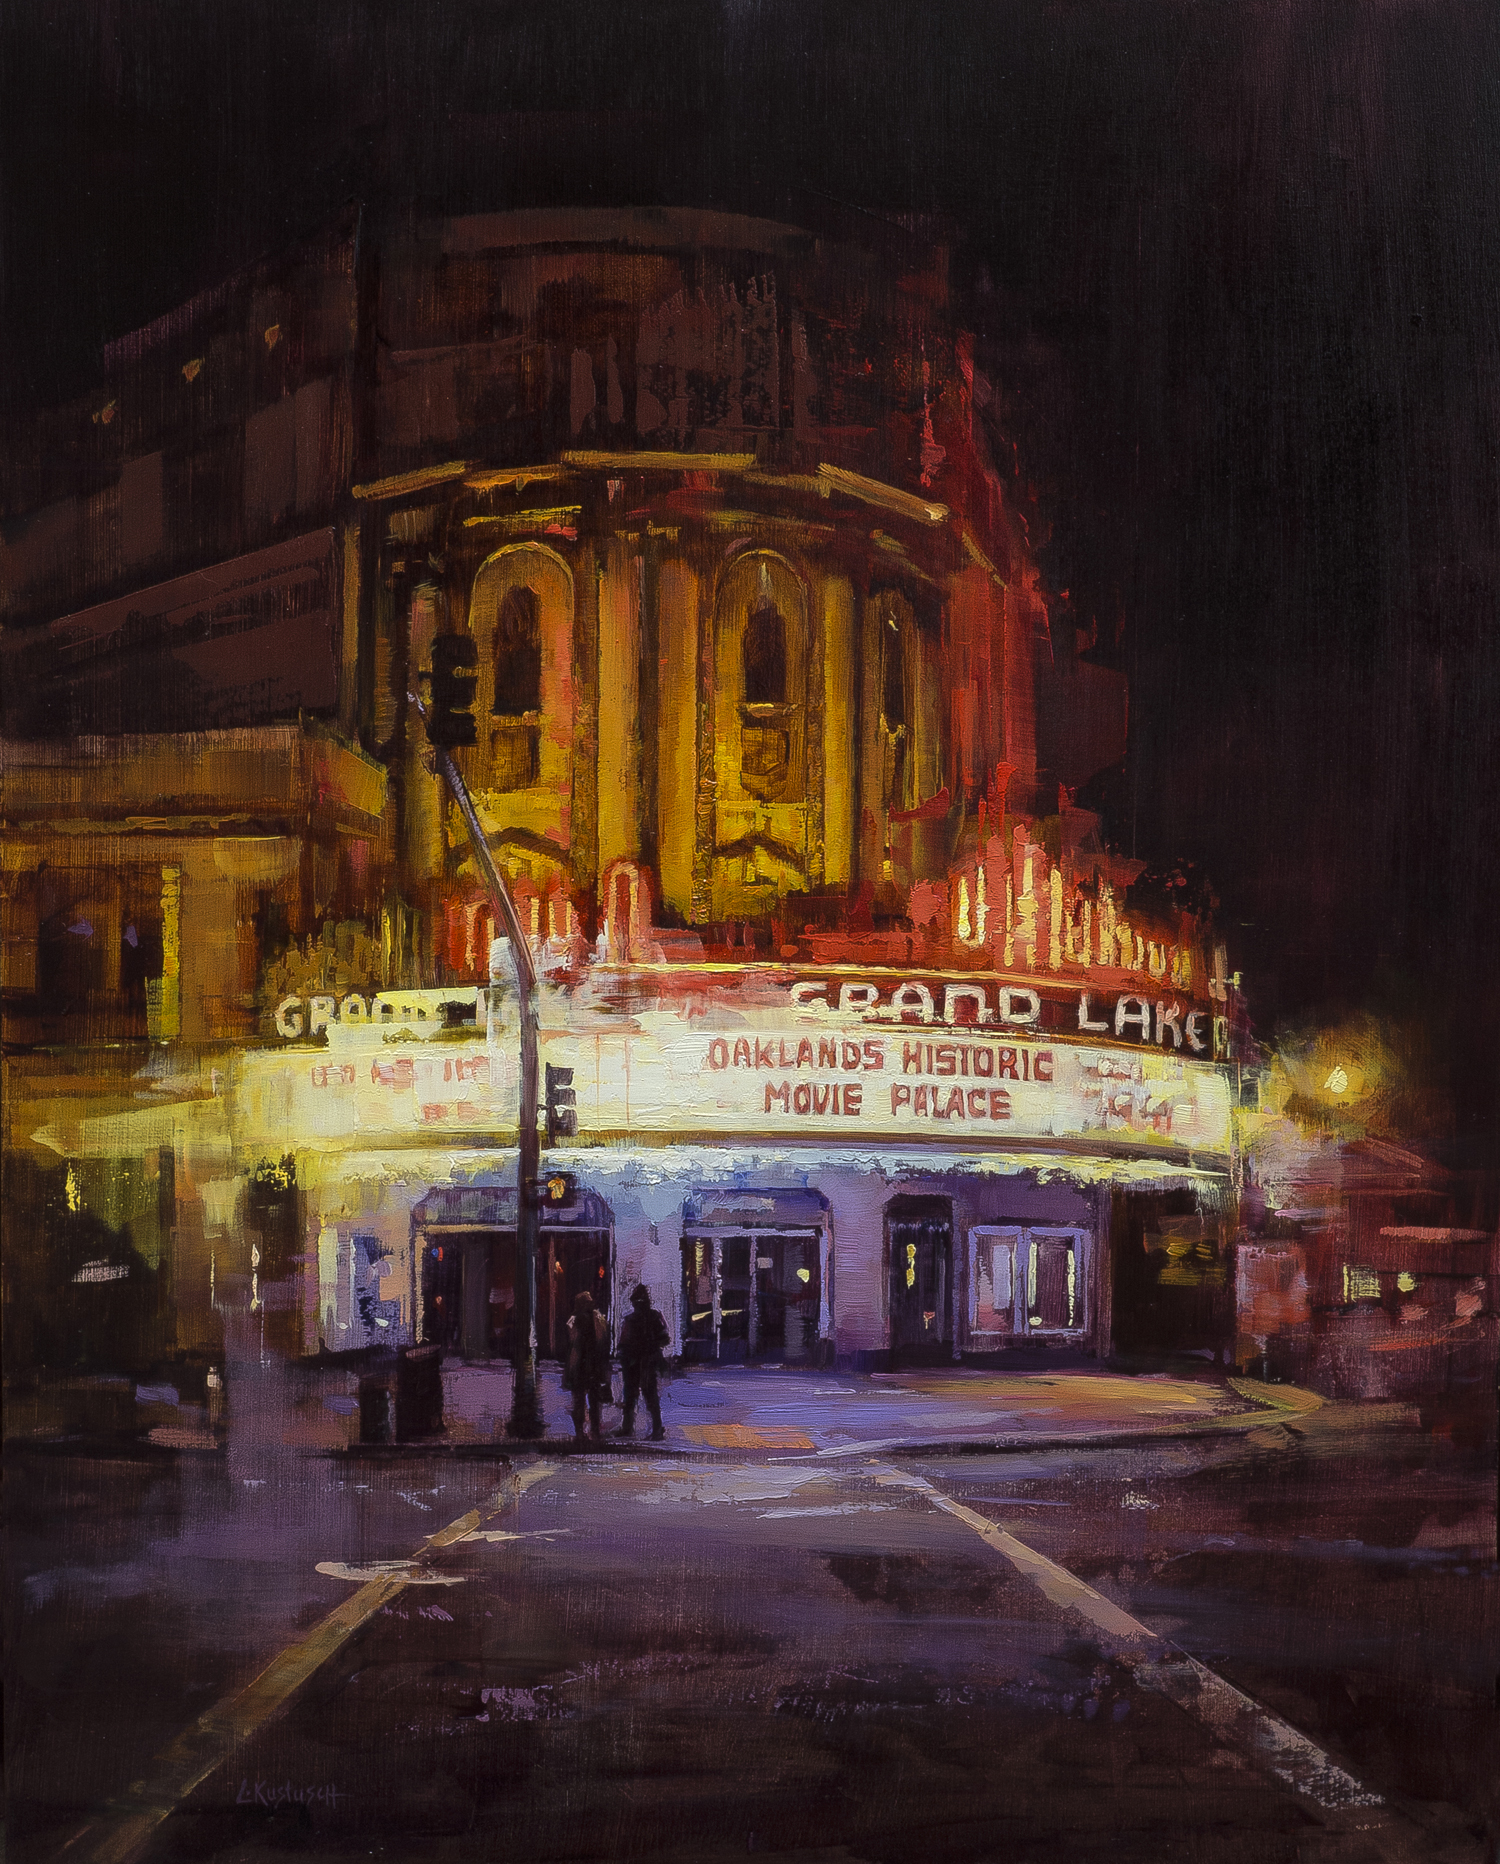 Oakland's Historic Movie Palace